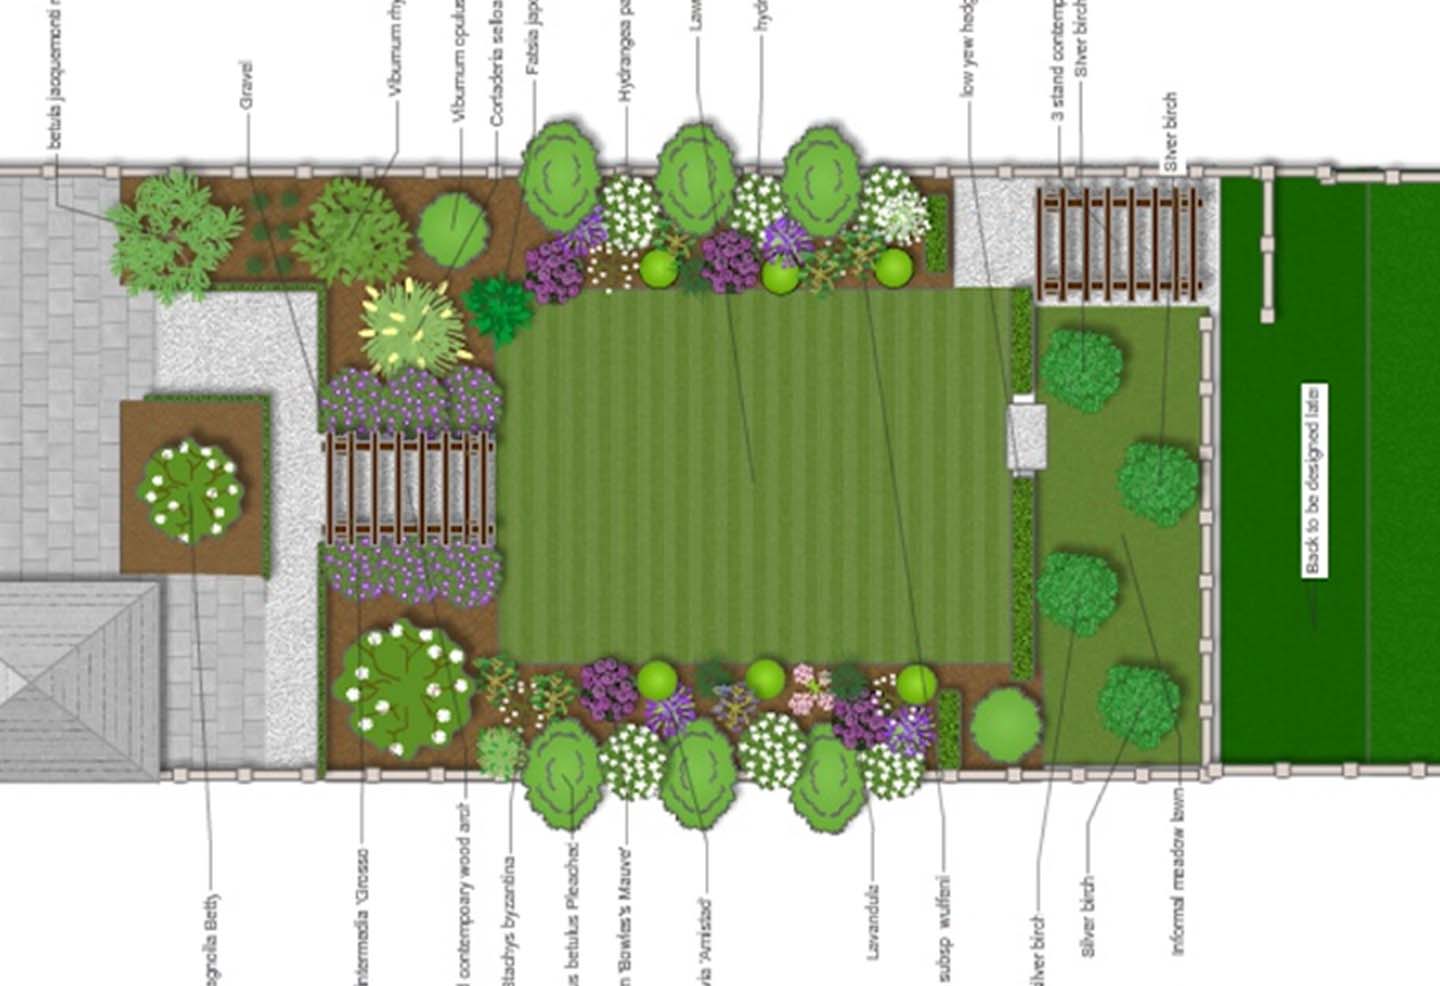 The garden design process - Step 5